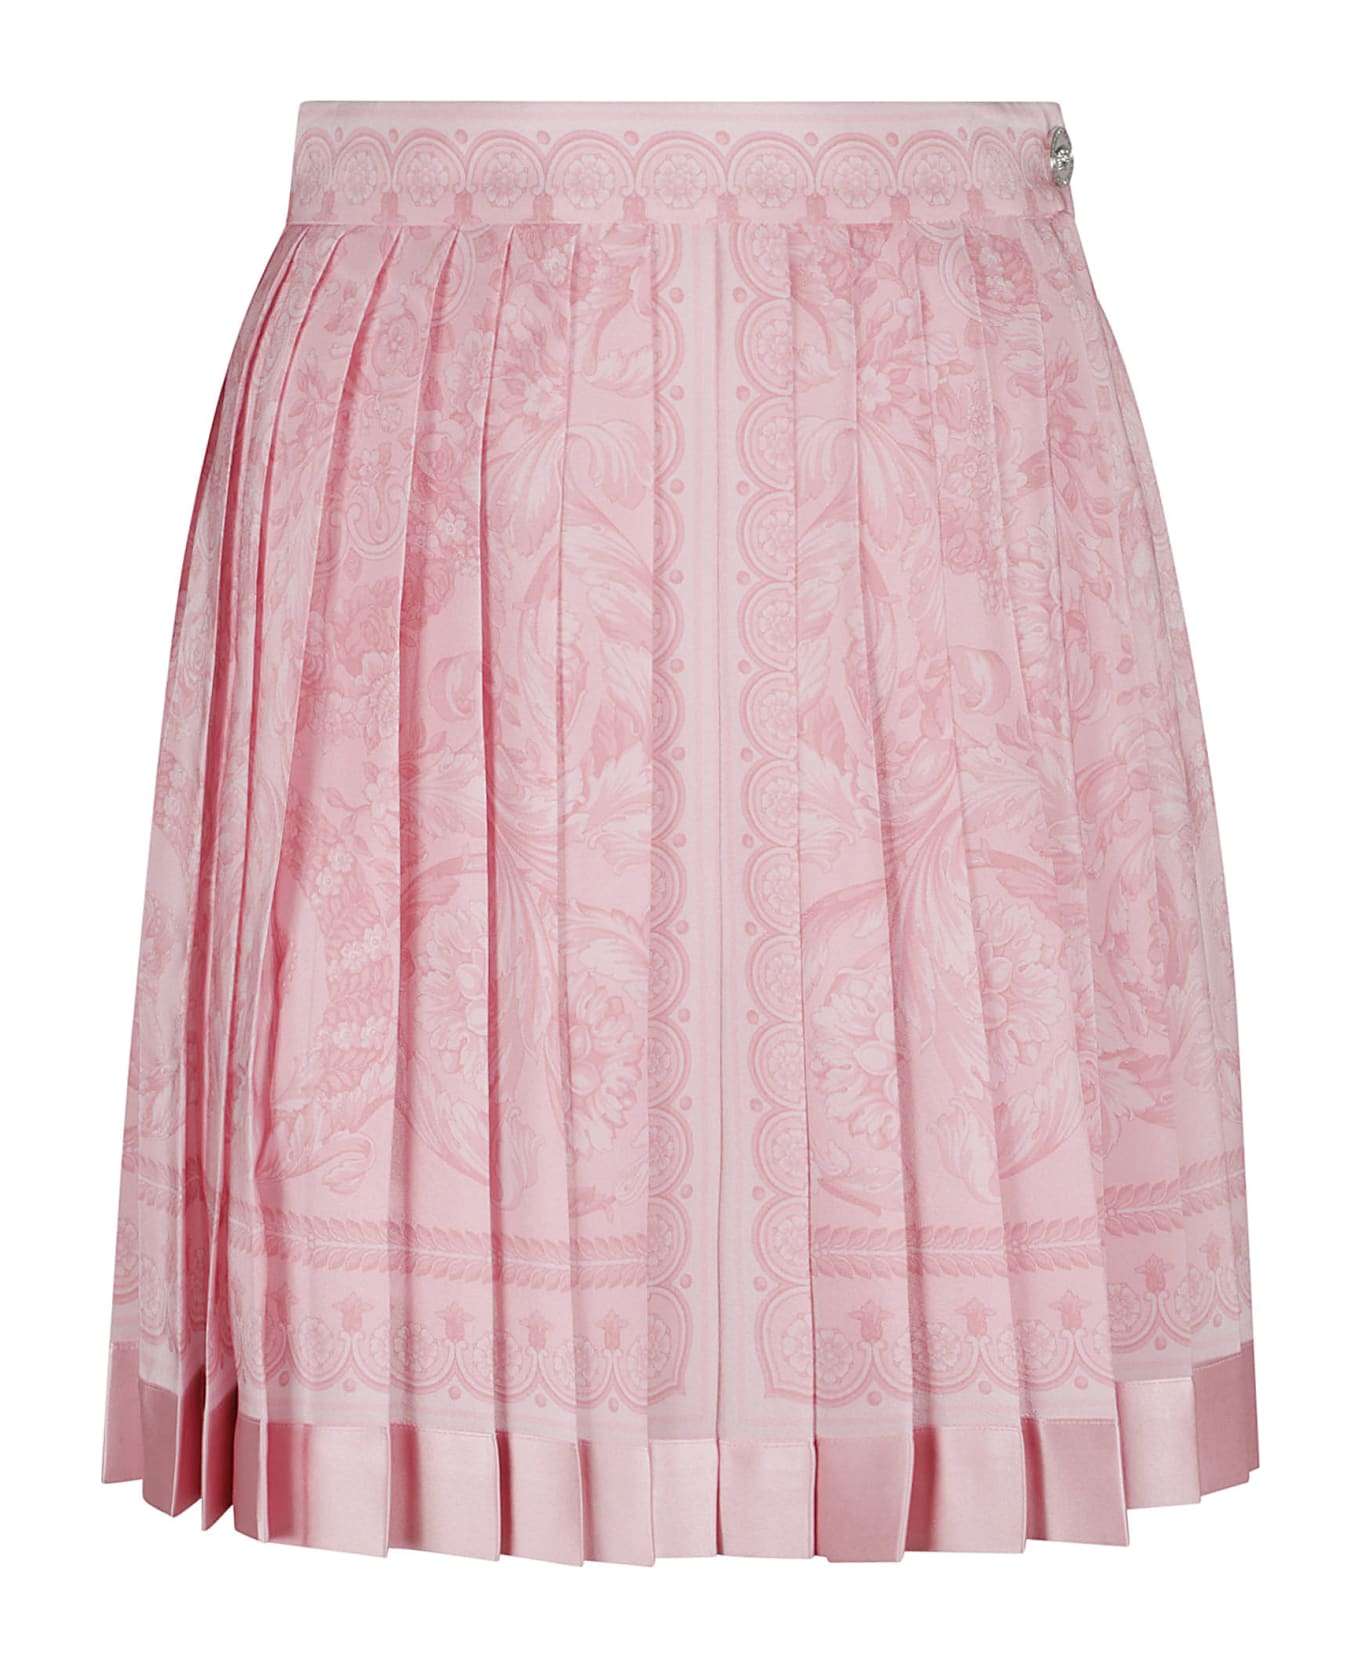 Versace Baroque Print Crepe Skirt - Pale Pink